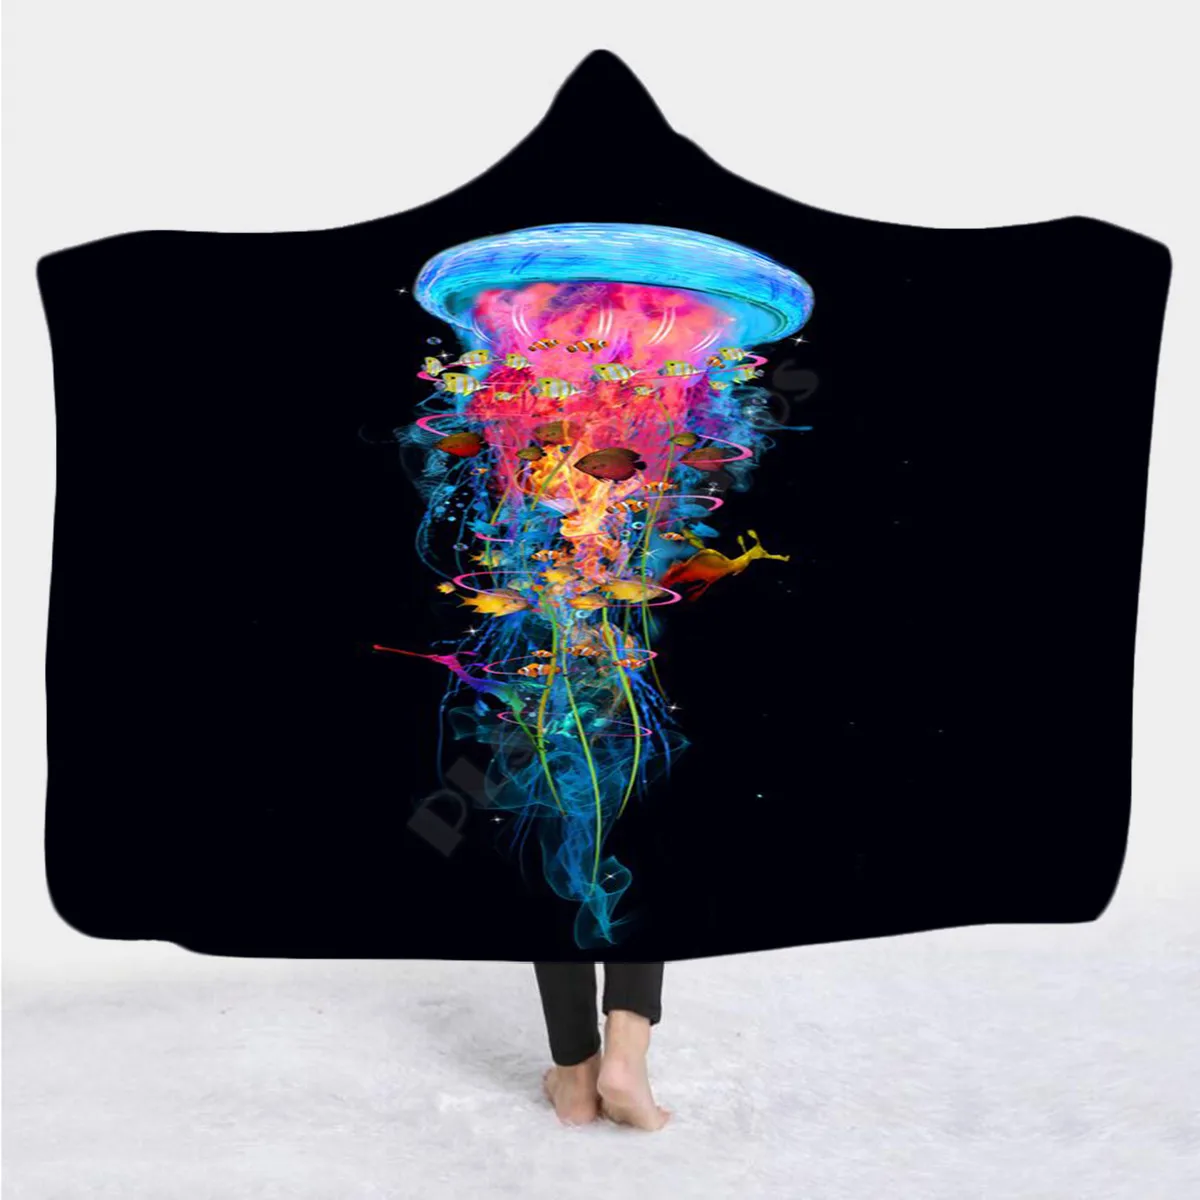 

Jellyfish Hooded Blanket 3D All Over Printed Wearable Blanket for Men and Women Adults Kids Fleece blanket 01